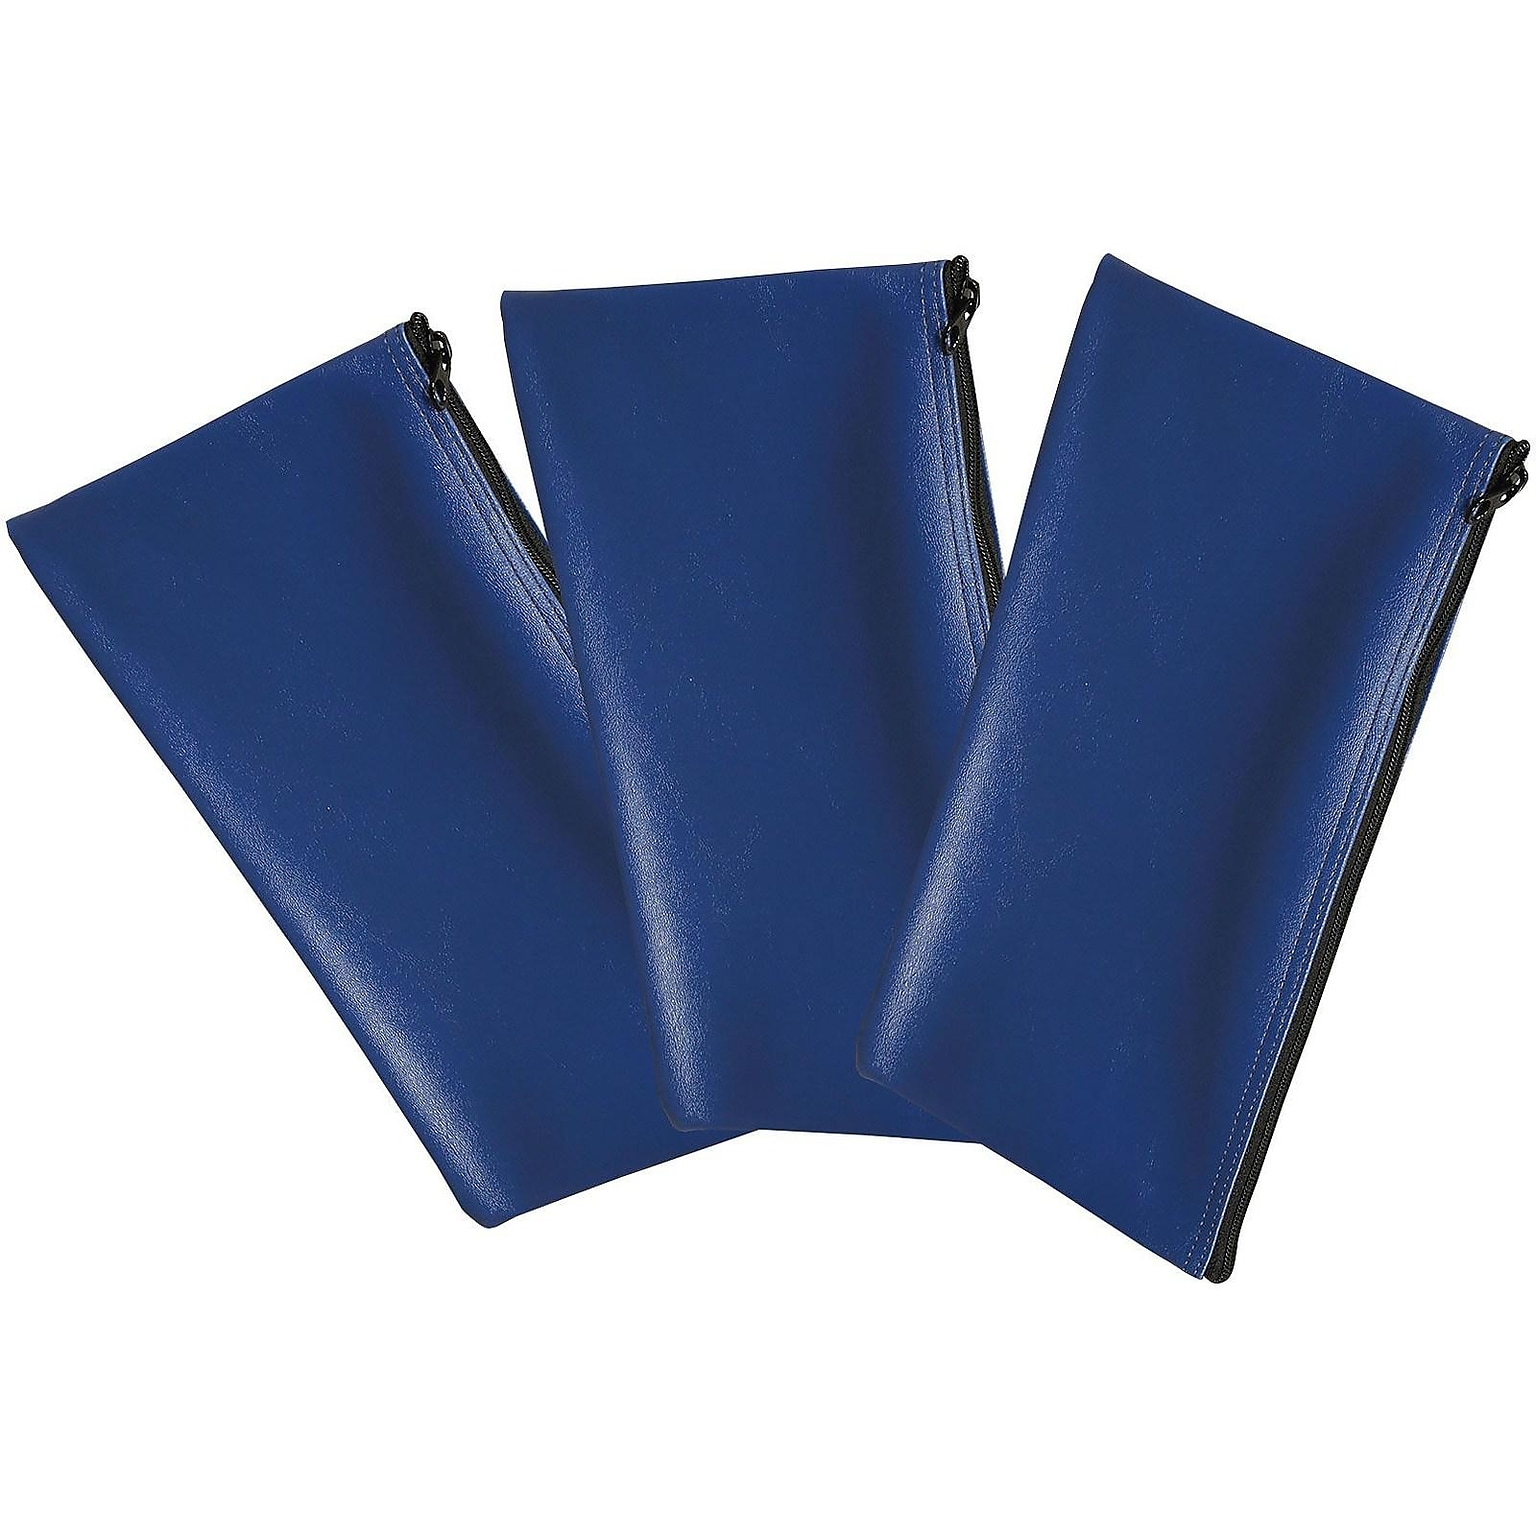 Honeywell Multipurpose Zipper Bag Deposit Bags, Blue, 3/Pack (6503)